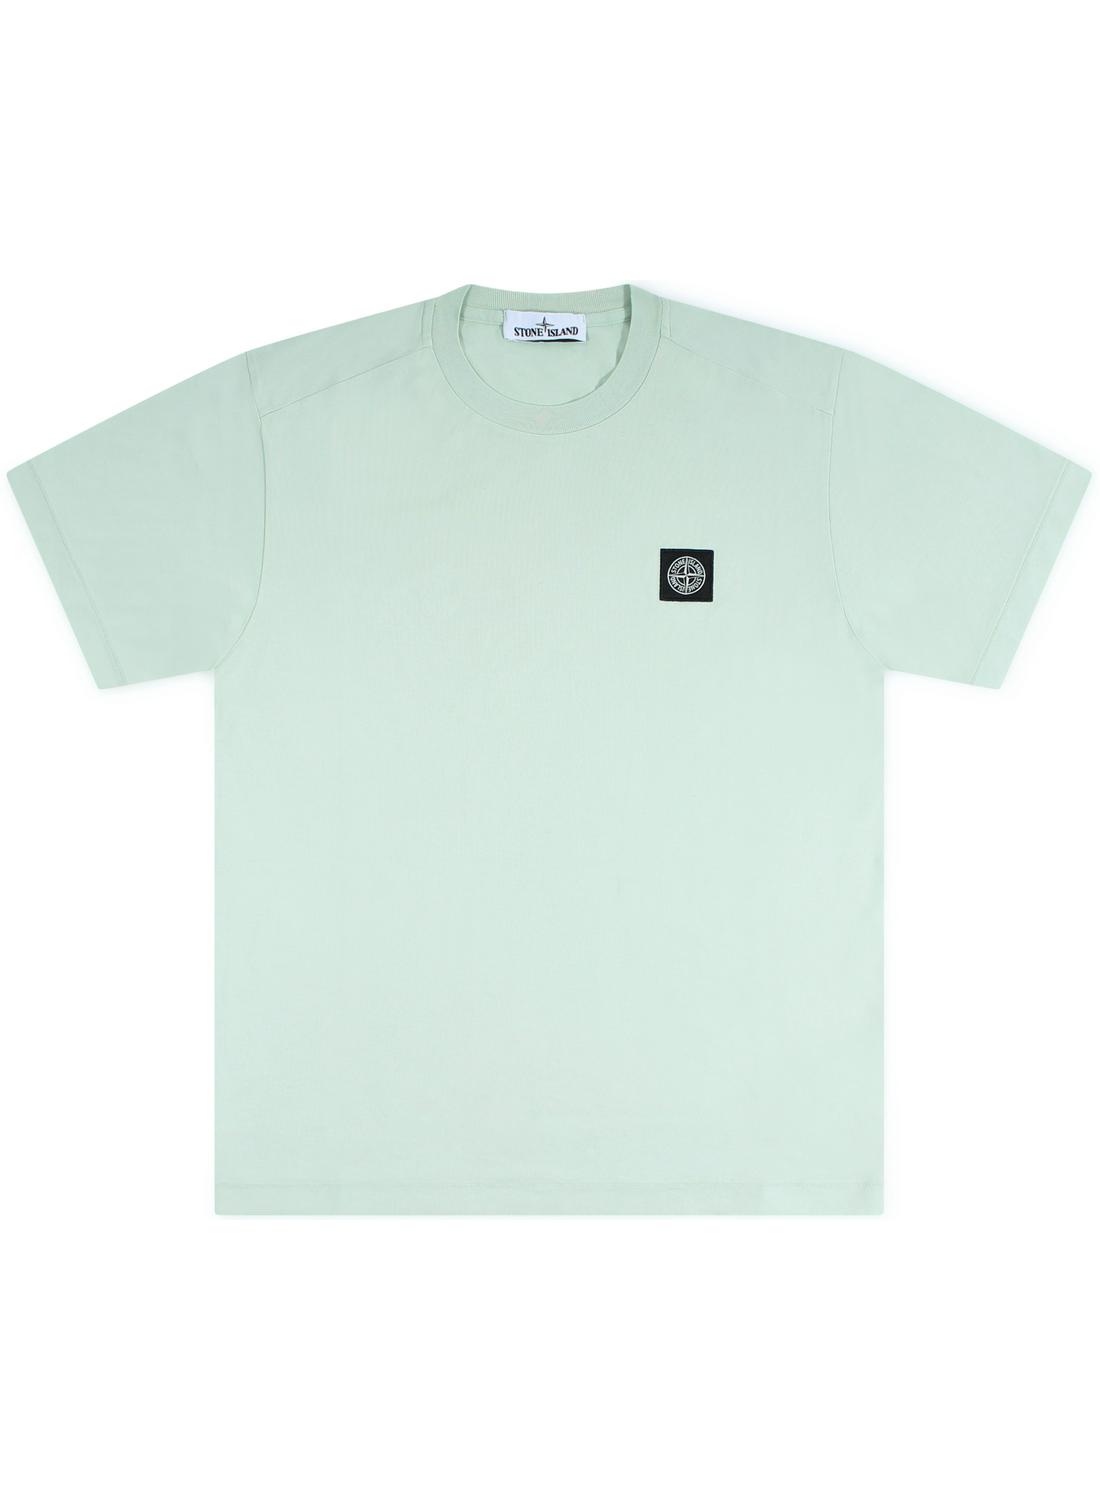 MINT GROEN - STONE ISLAND T-shirt met Compass embleem, mint V0052 13067 13067 - Tijssen Mode